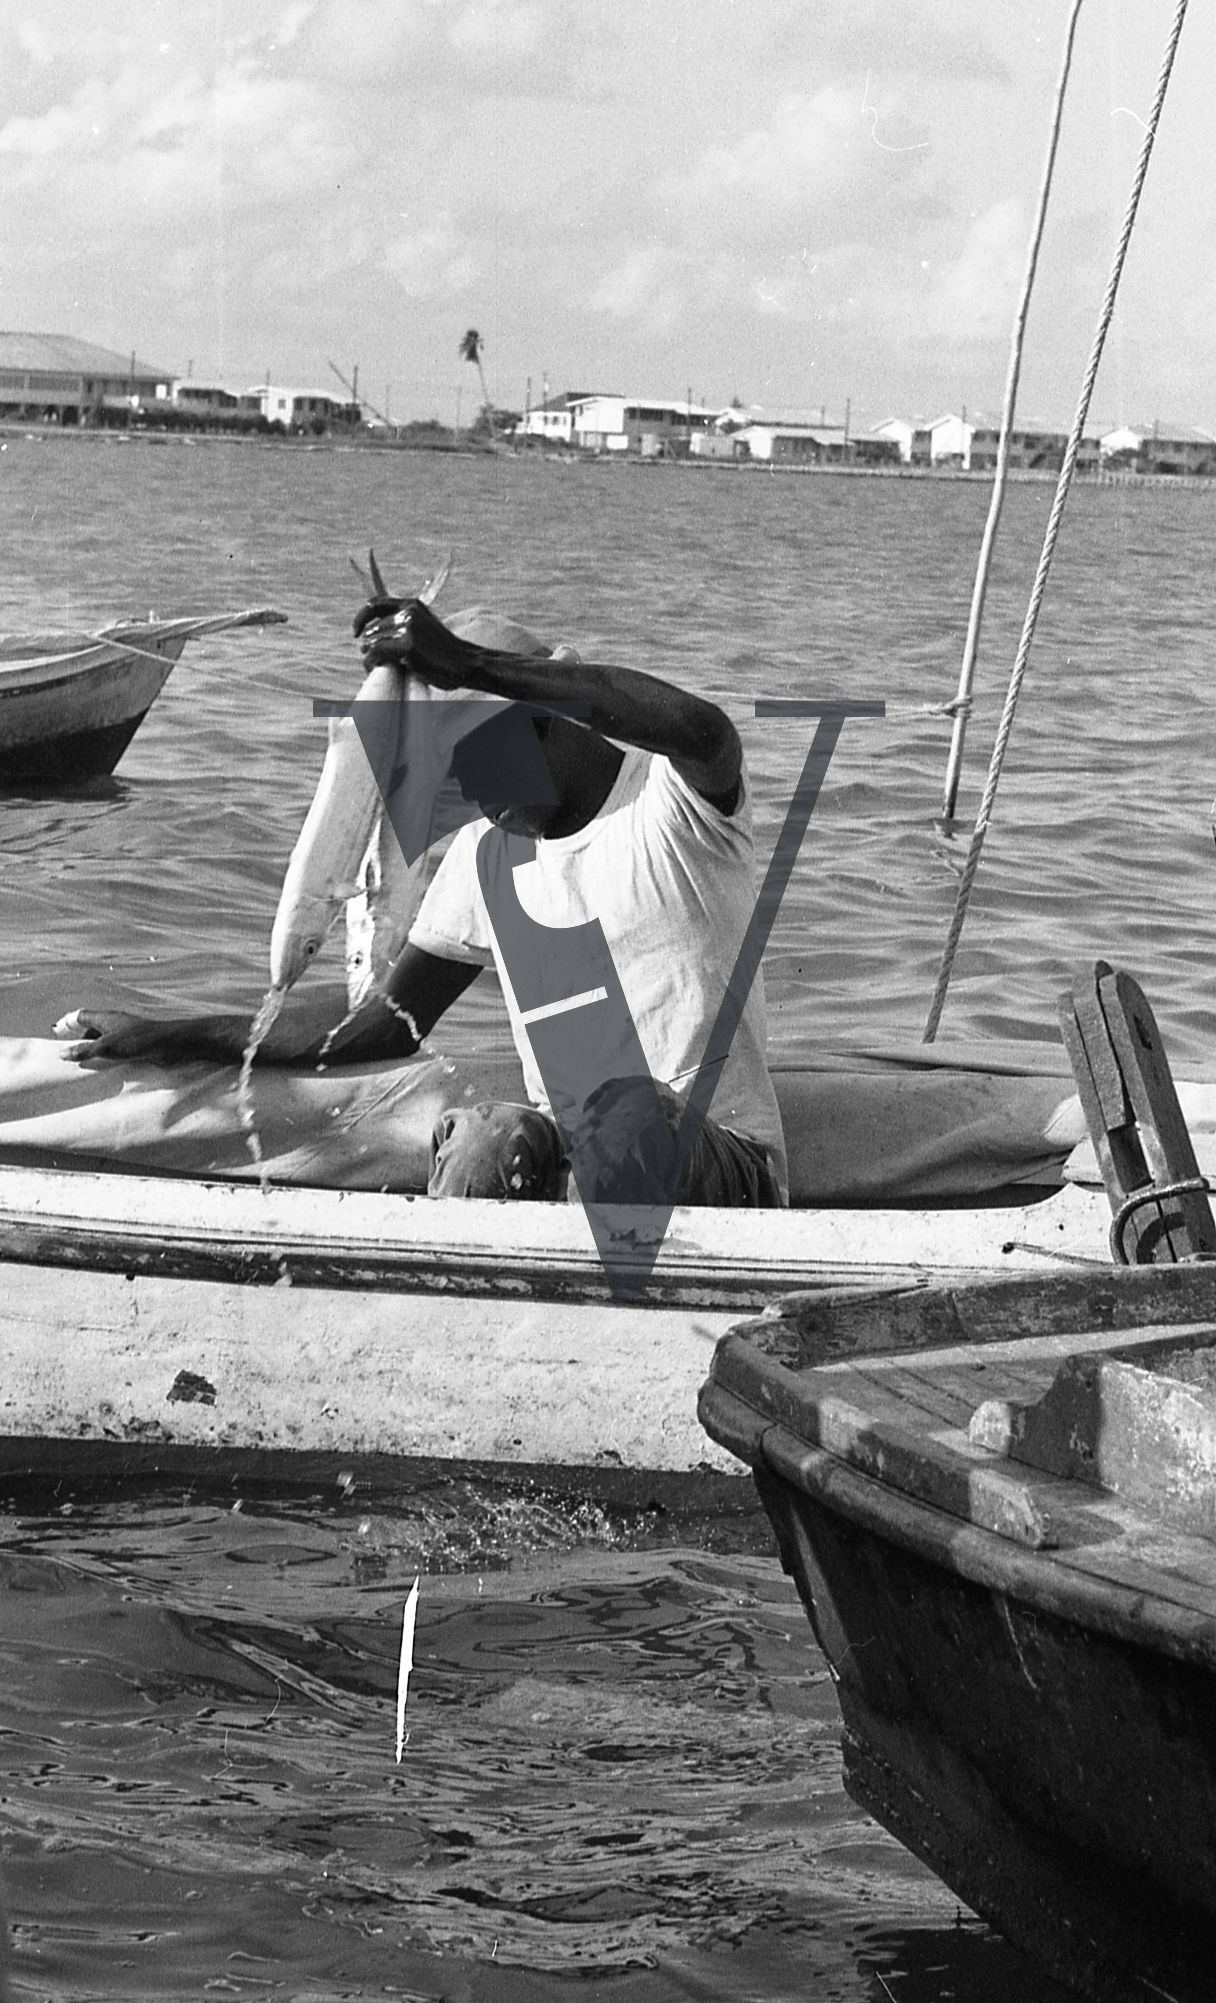 Belize, Fisherman, man pulling fish up to boat.